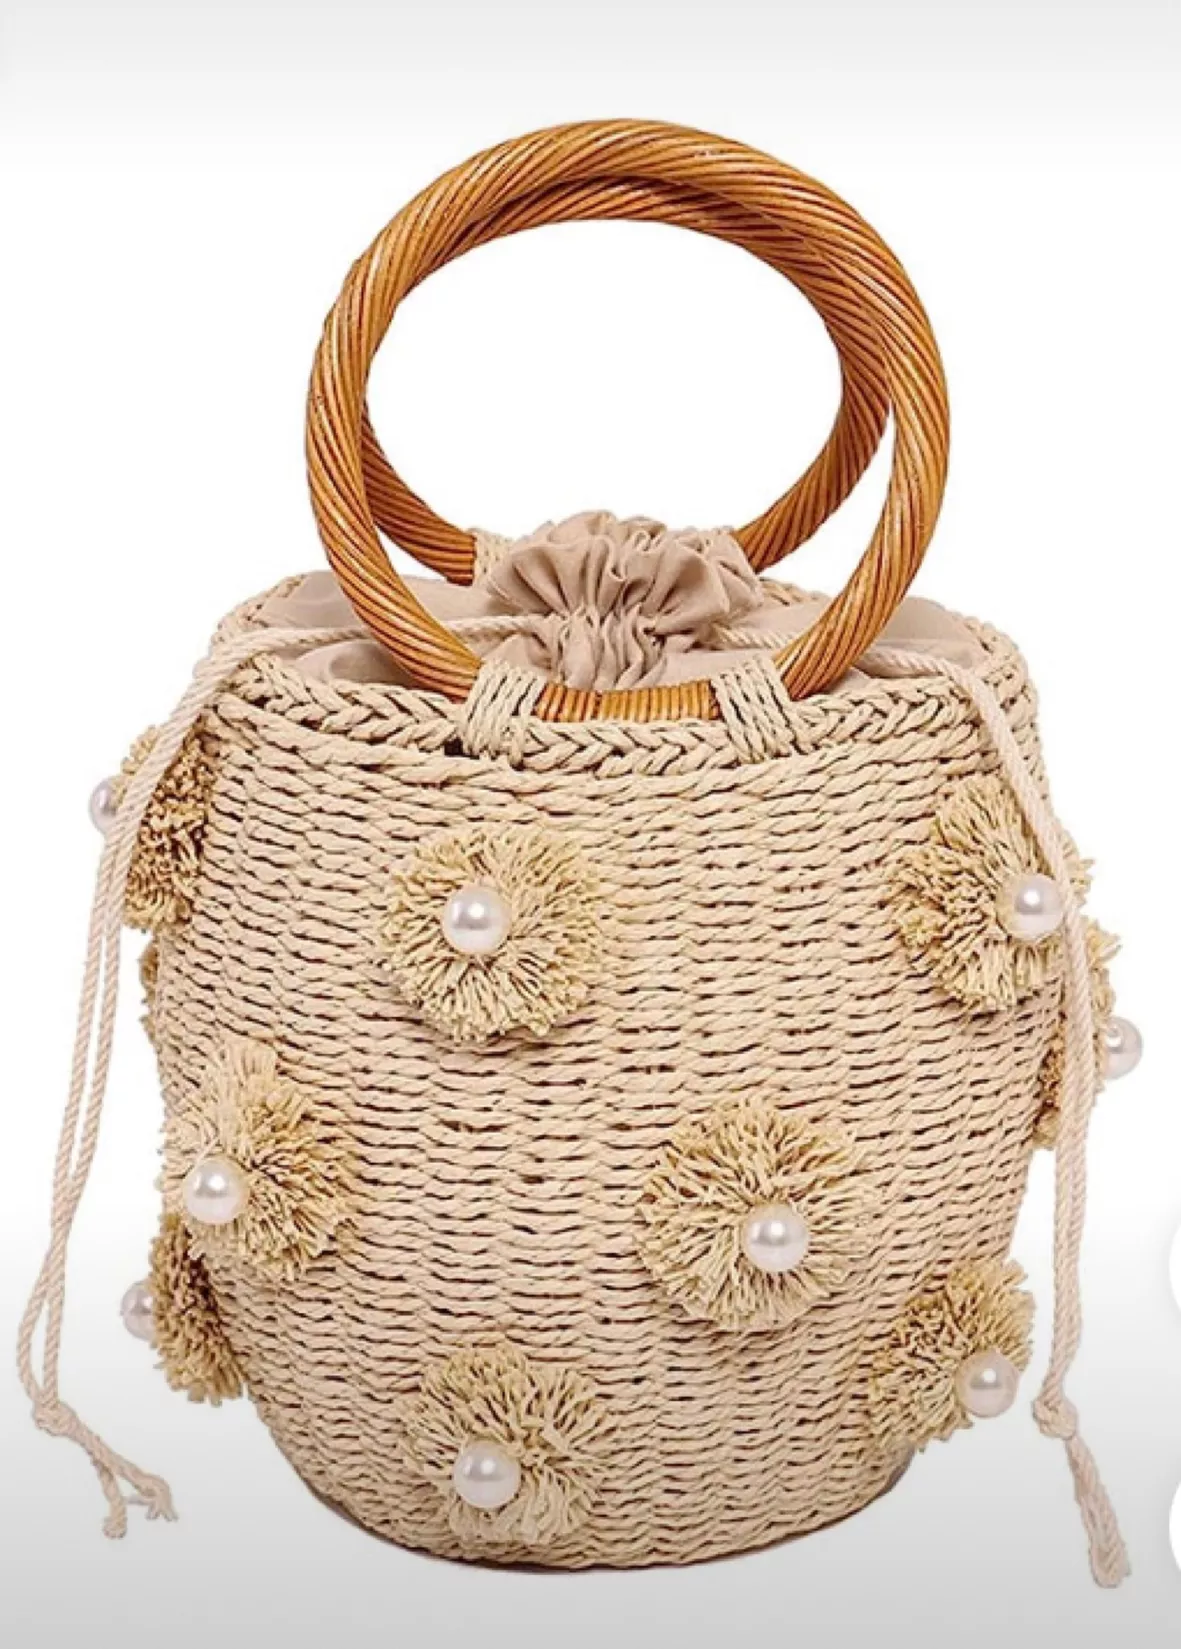 Summer Fashion Fave - Charming Straw Bags